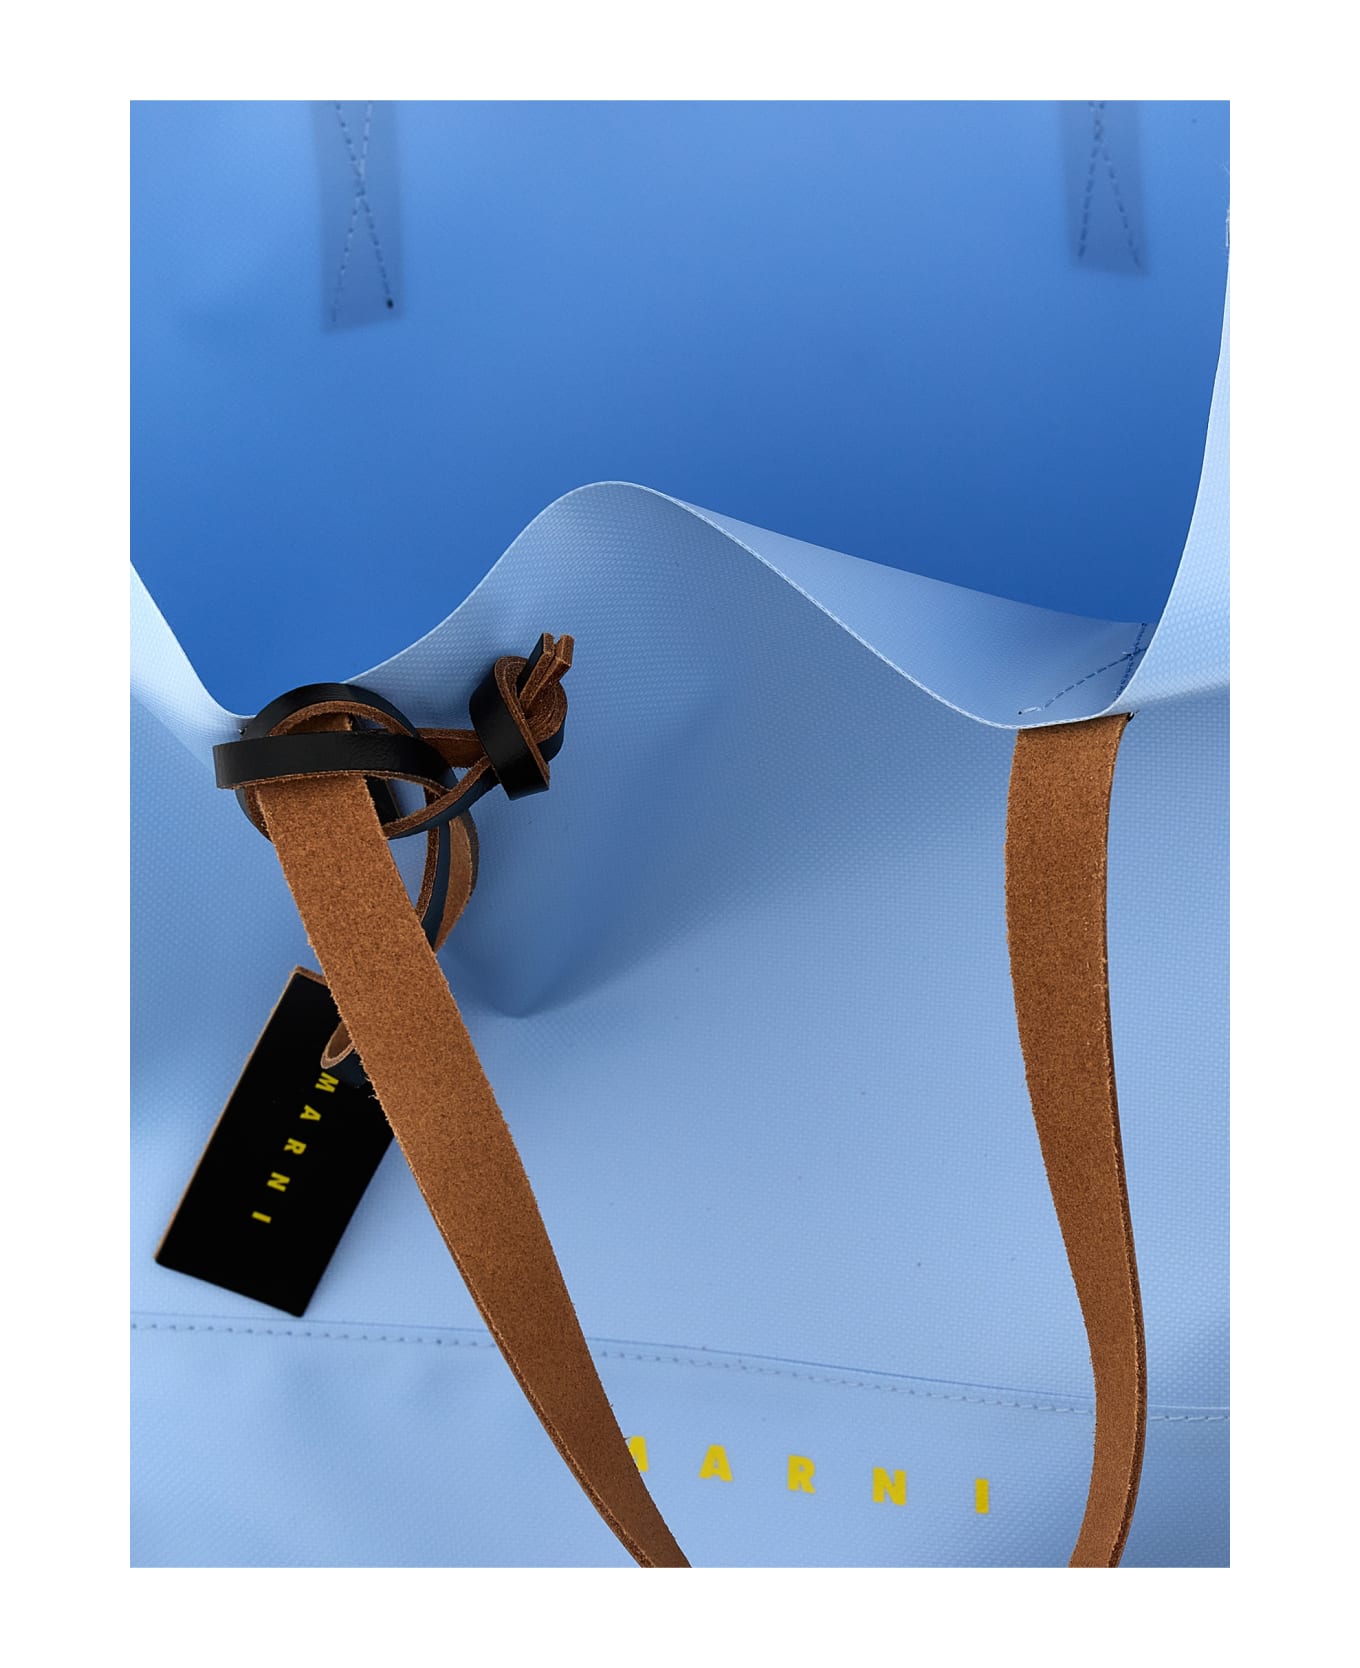 Marni 'tribeca' Shopping Bag - Light Blue